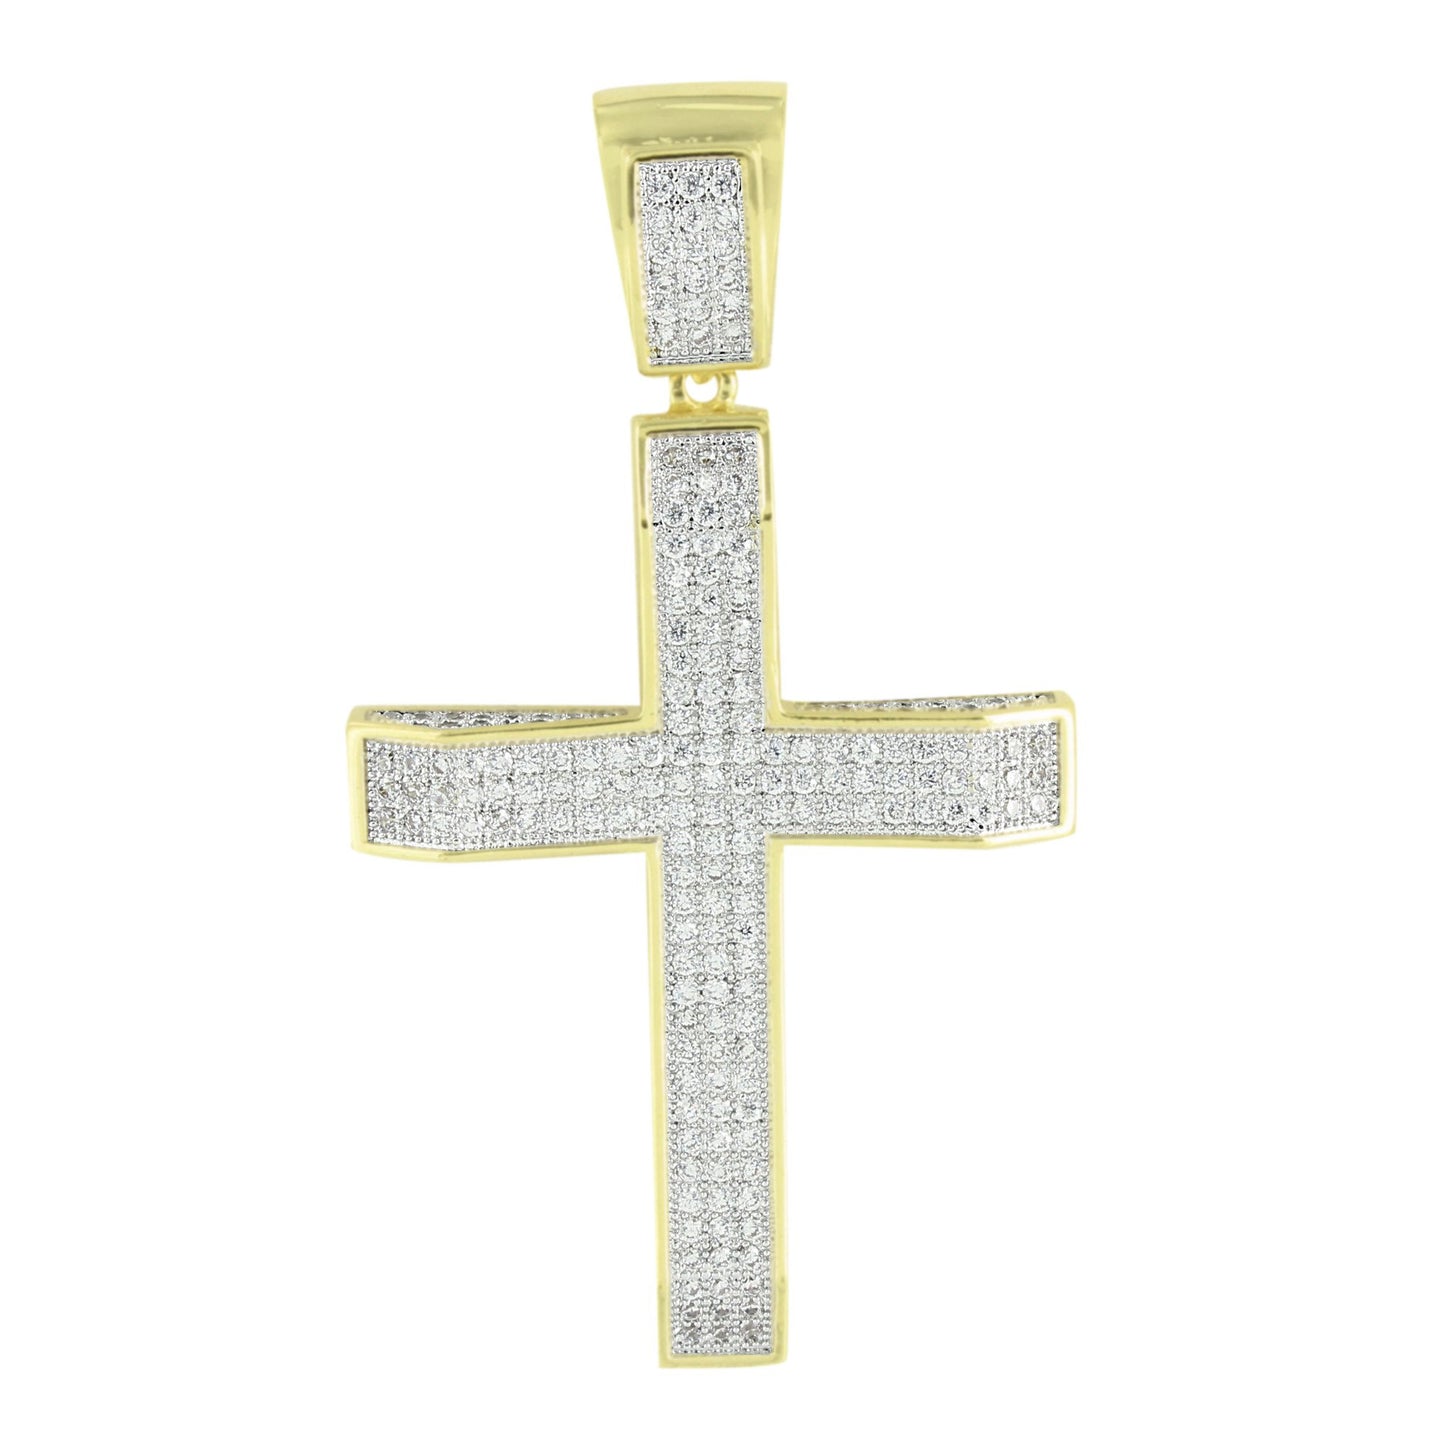 Simulated Diamonds Cross Pendant Gold Finish Pave Set Jesus Charm Bling 2.4"